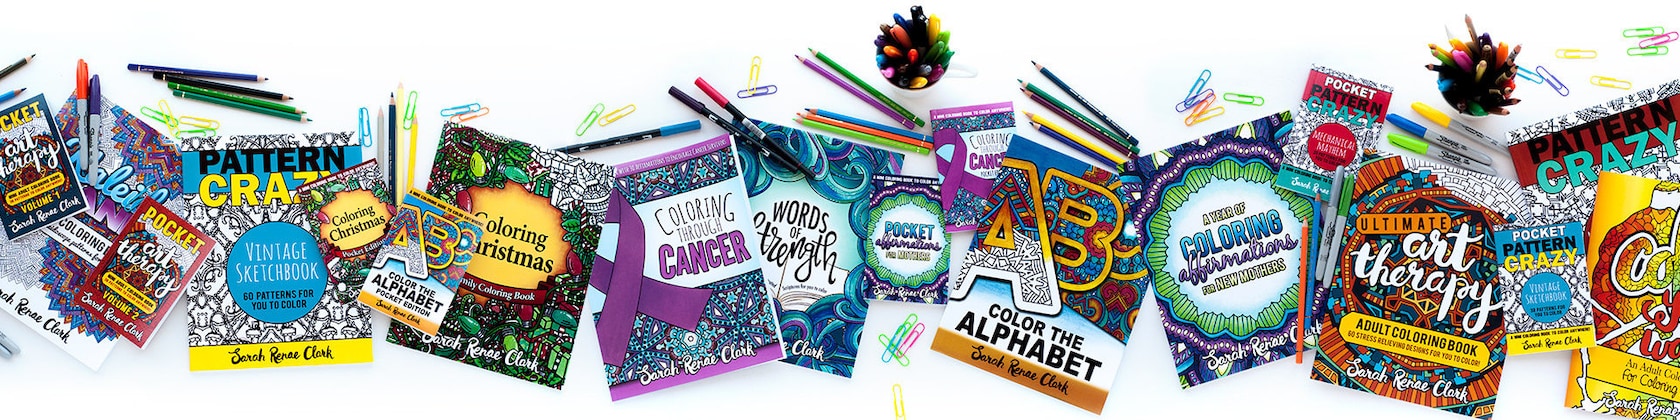 Motivational Printable Stickers - Sarah Renae Clark - Coloring Book Artist  and Designer